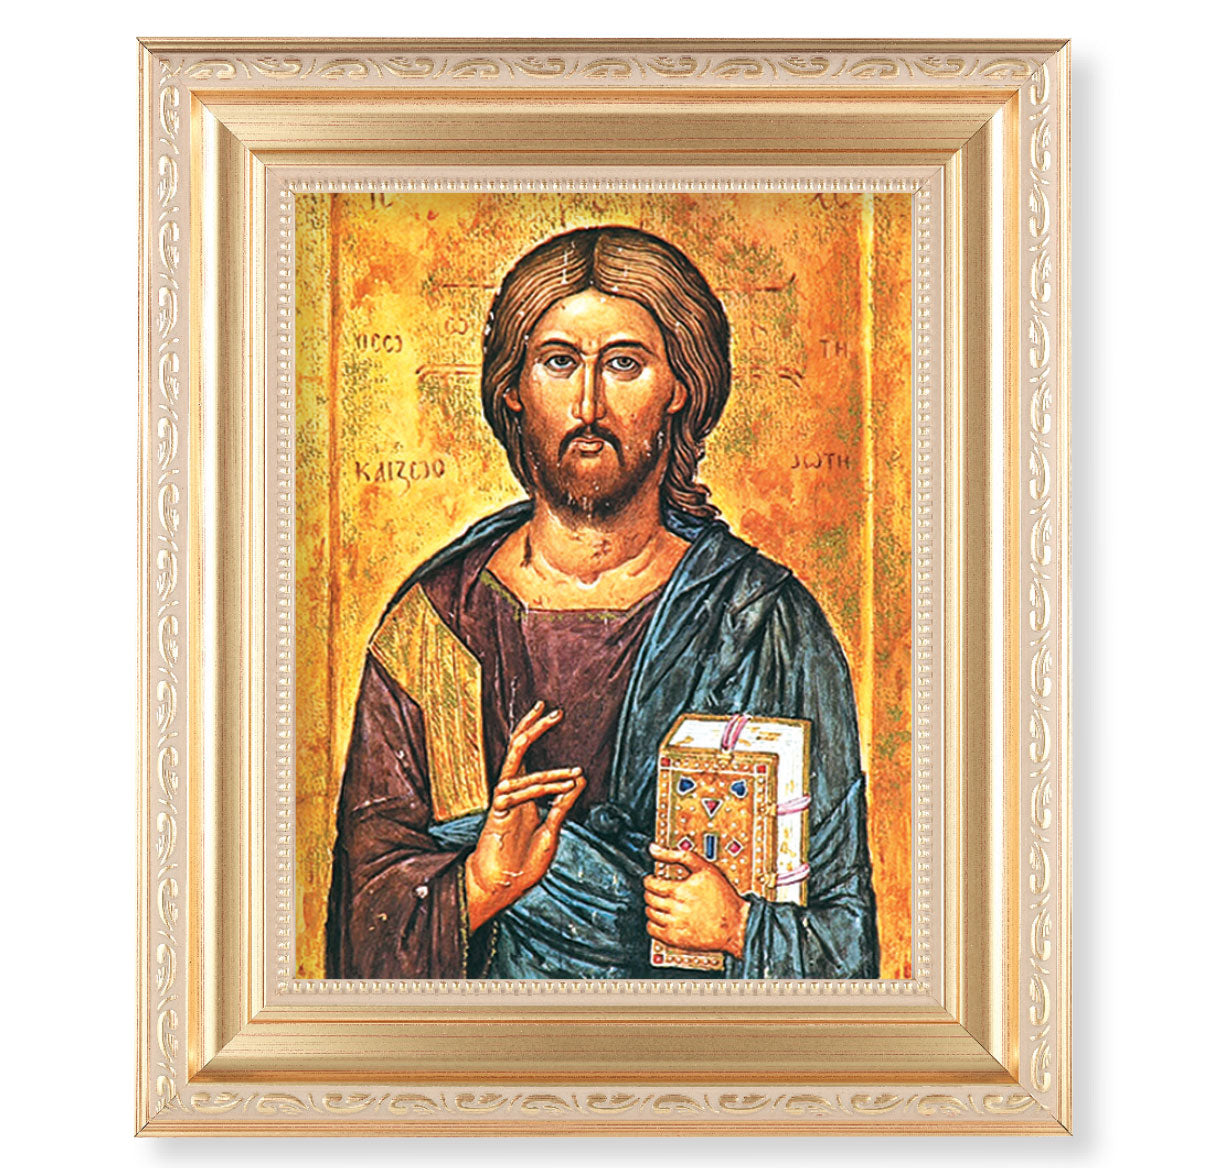 Christ All Knowing Gold Framed Art